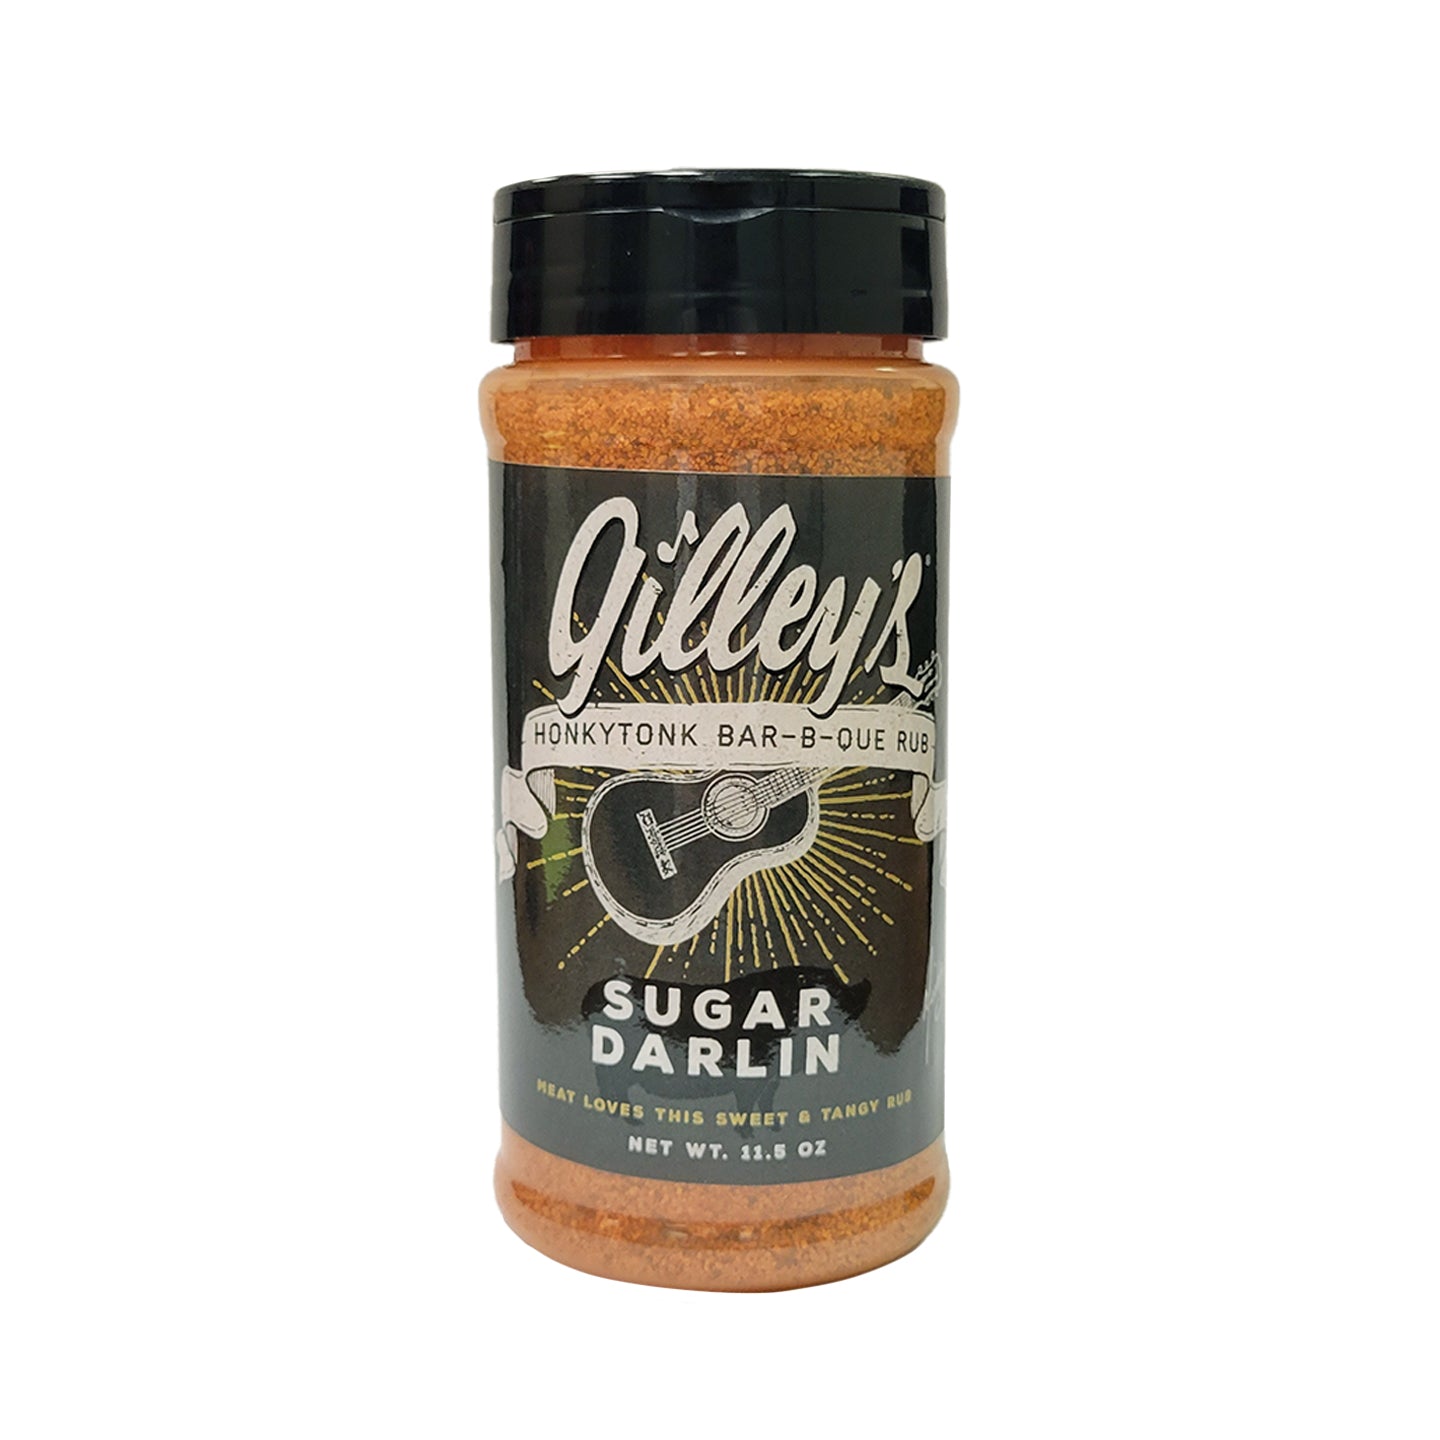 Gilley's Sugar Darlin' Honkytonk BBQ Rub